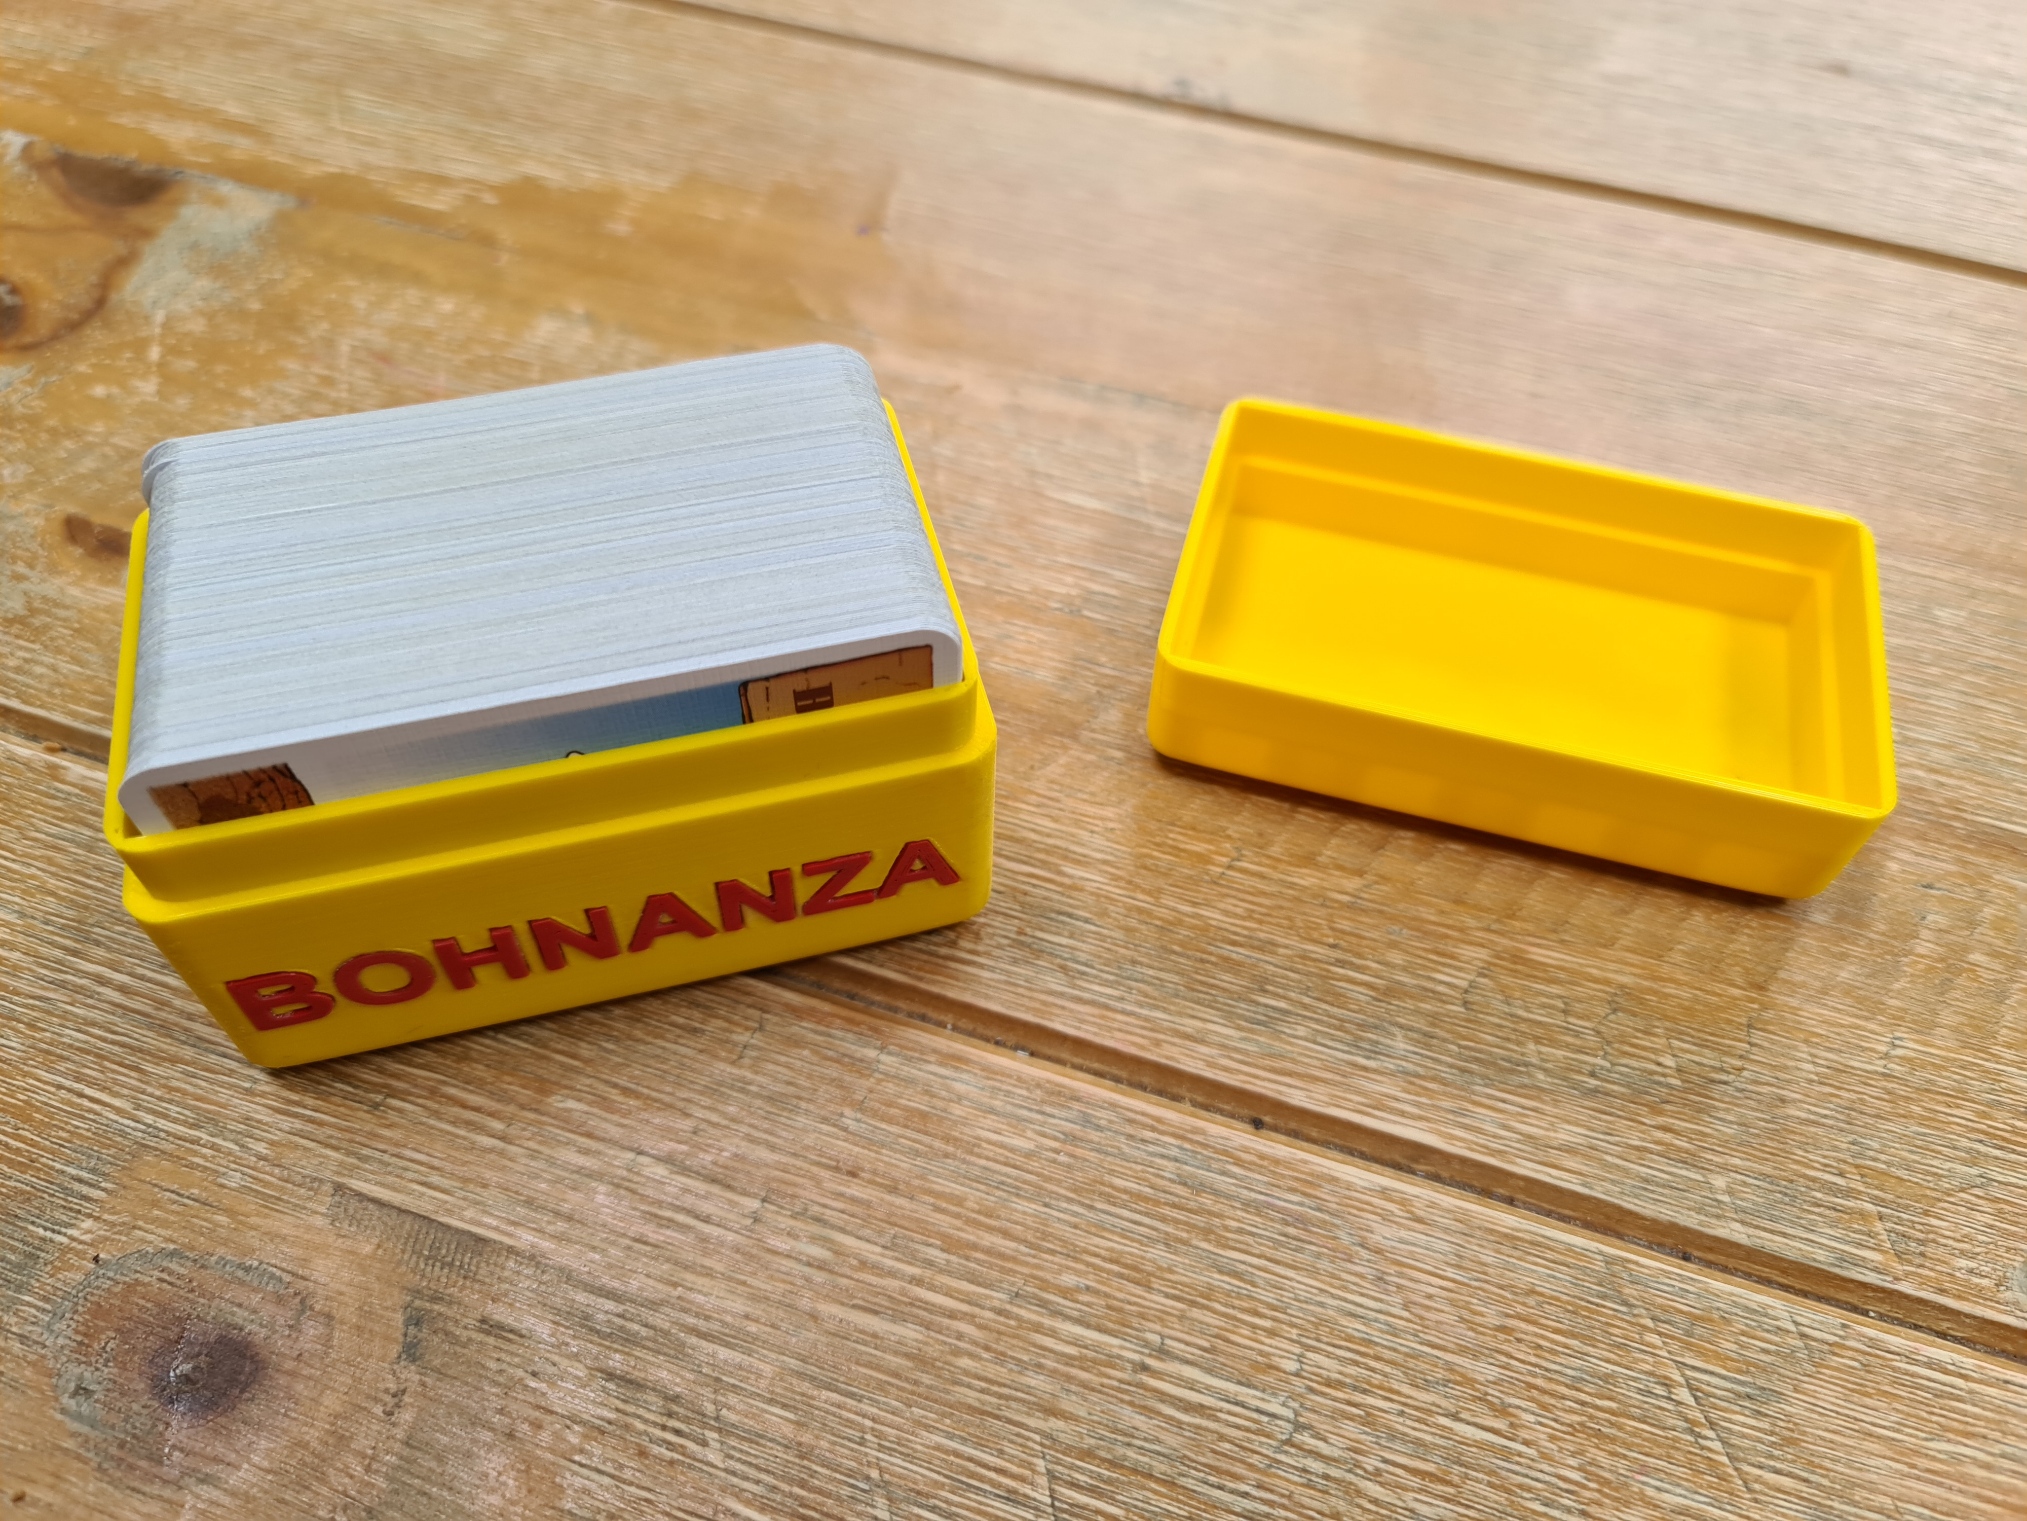 Bohnanza Board Game Box